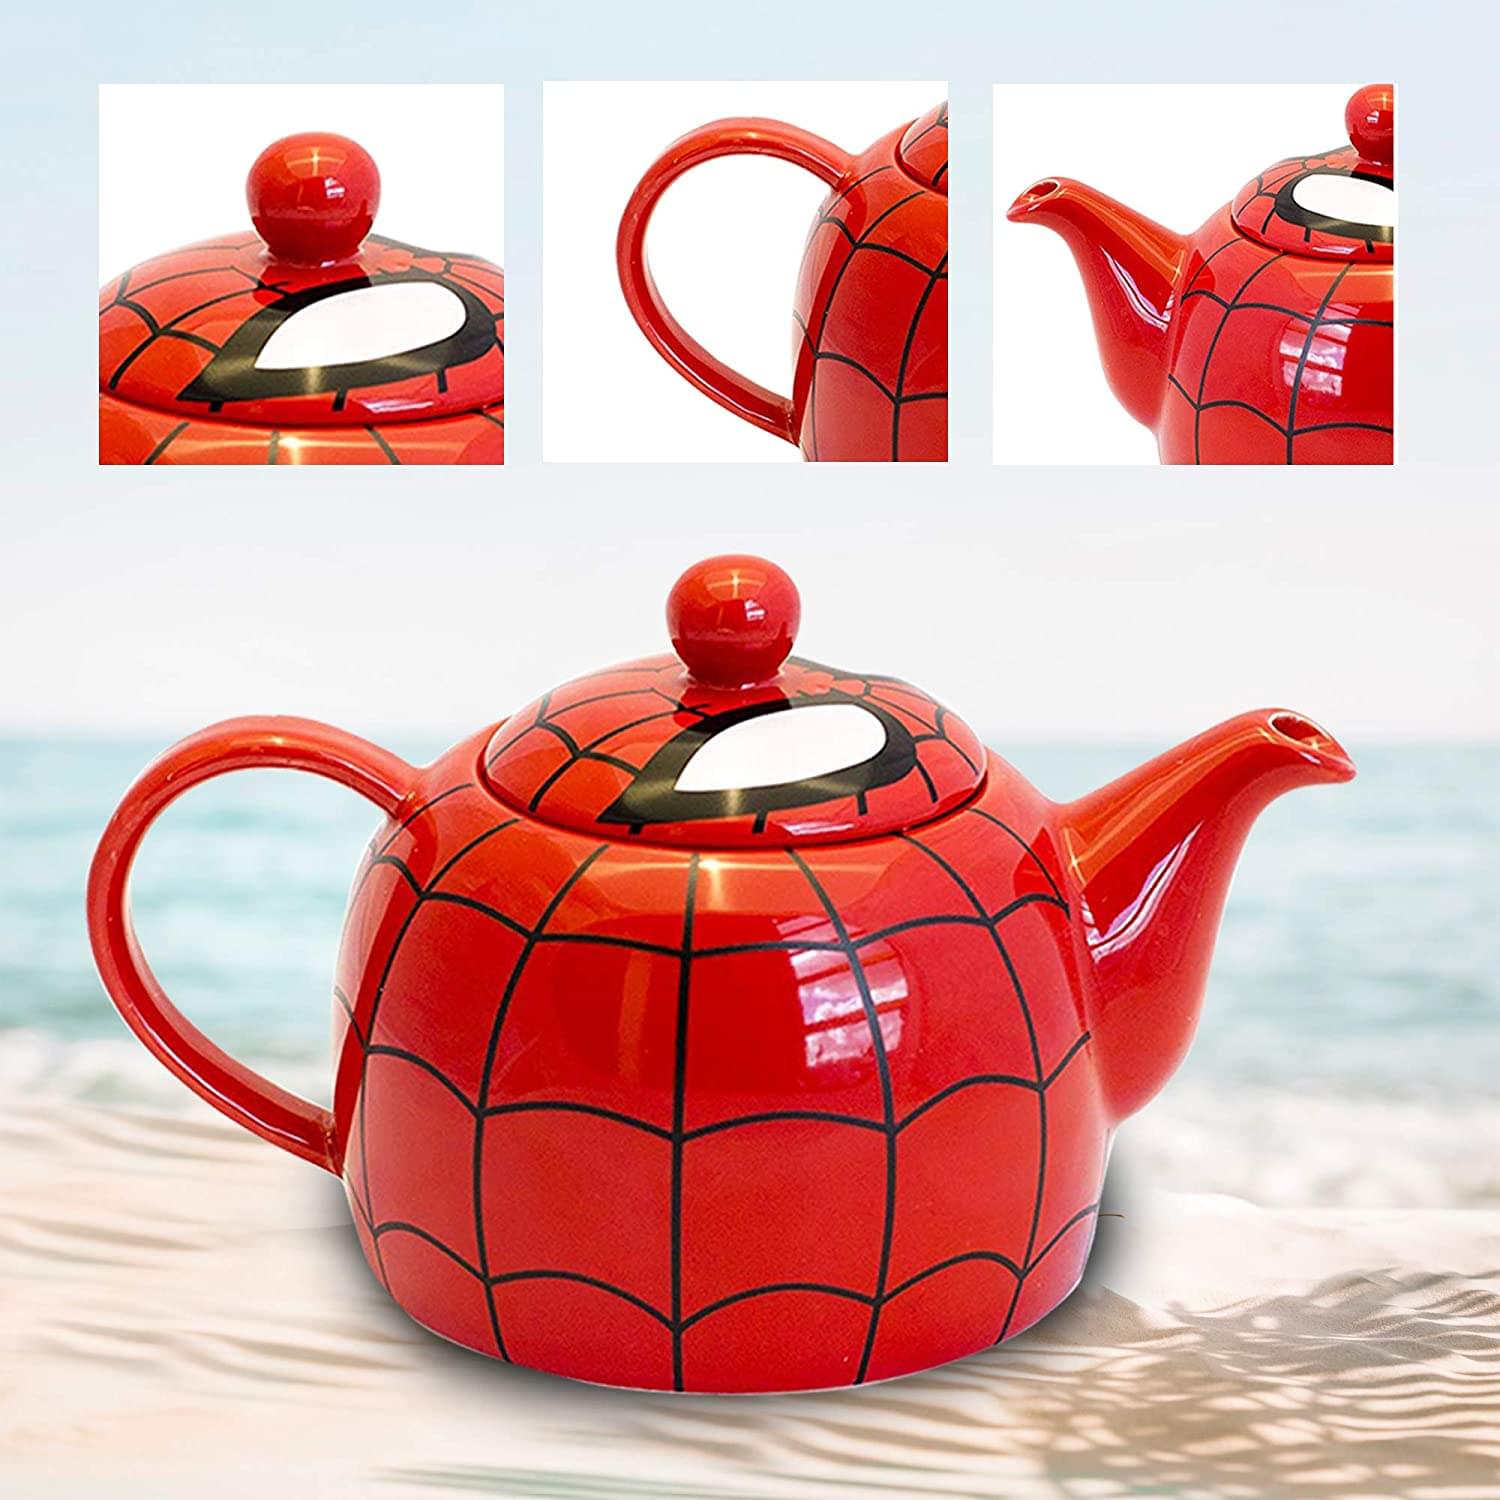 Marvel I AM SPIDER-MAN Ceramic Teapot with Web Mask Detail Lid